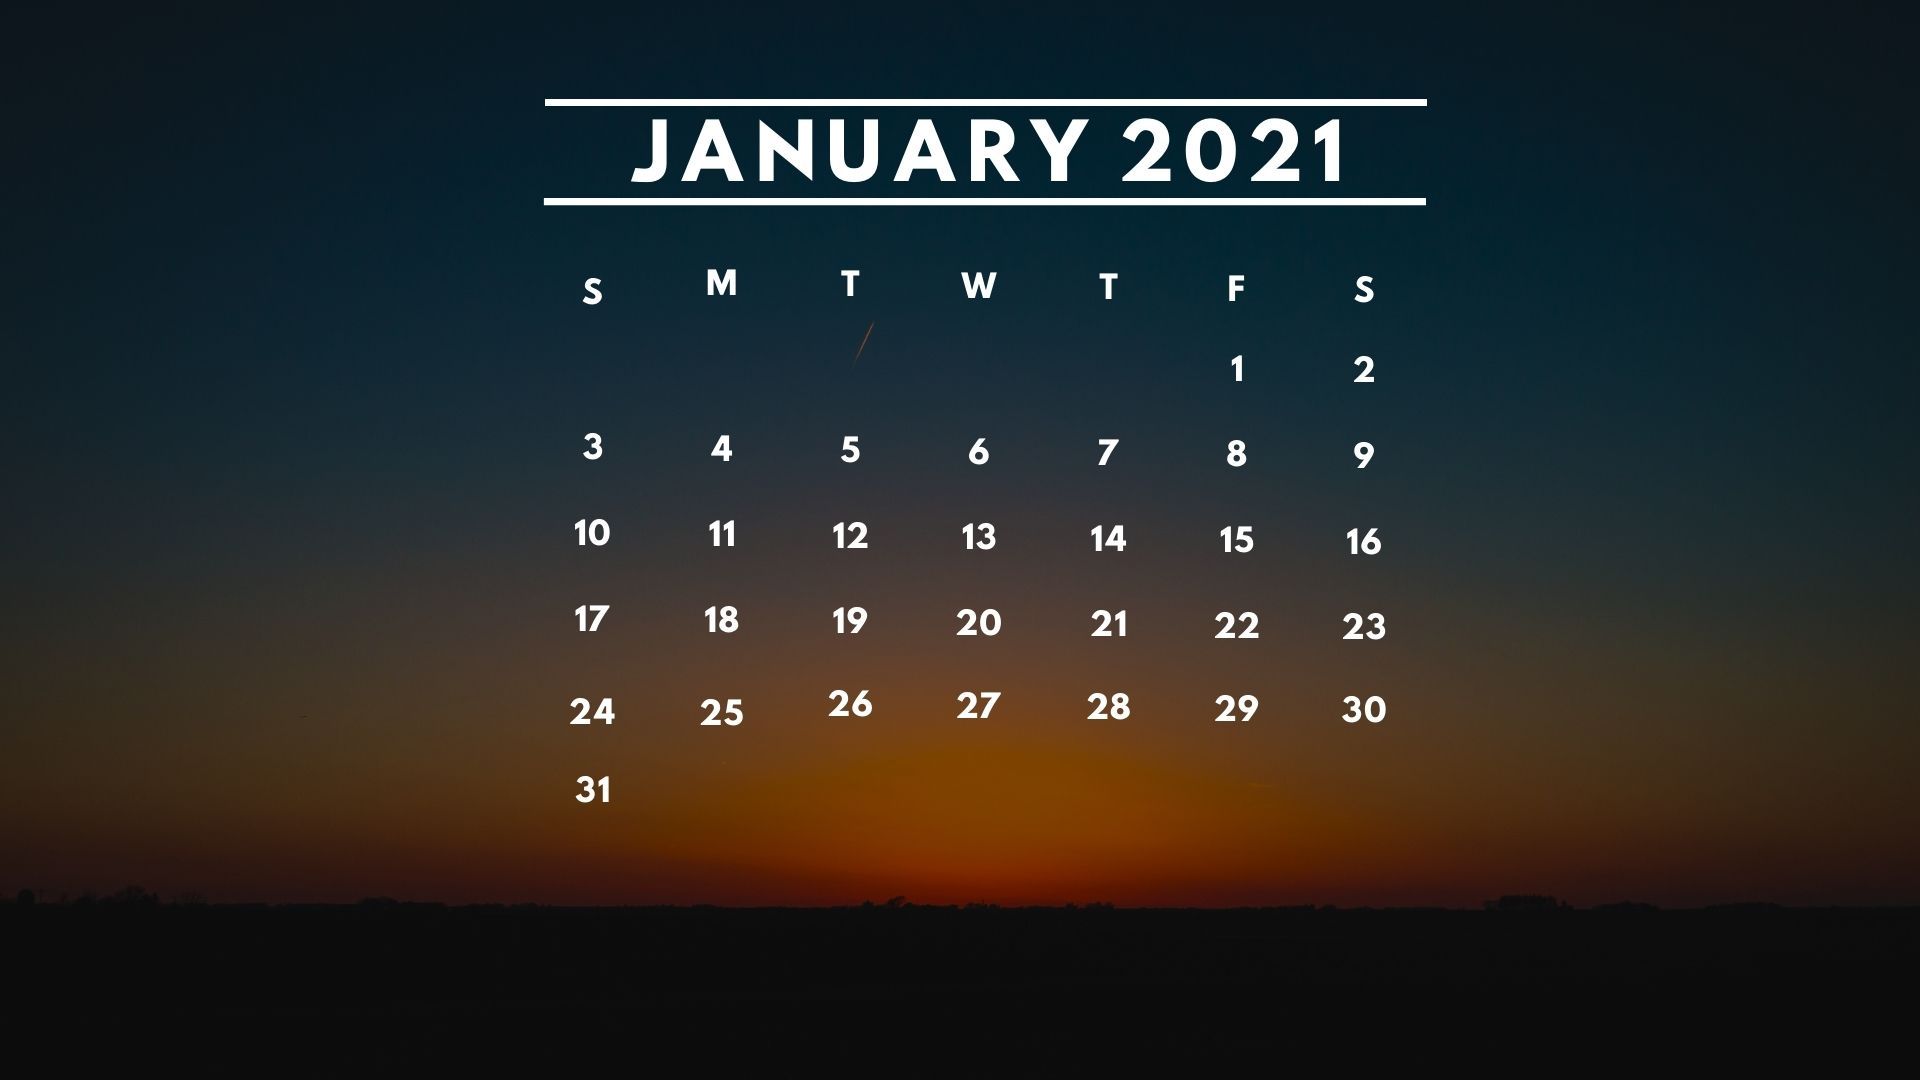 Free January 2021 Desktop Wallpaper Image ID 4